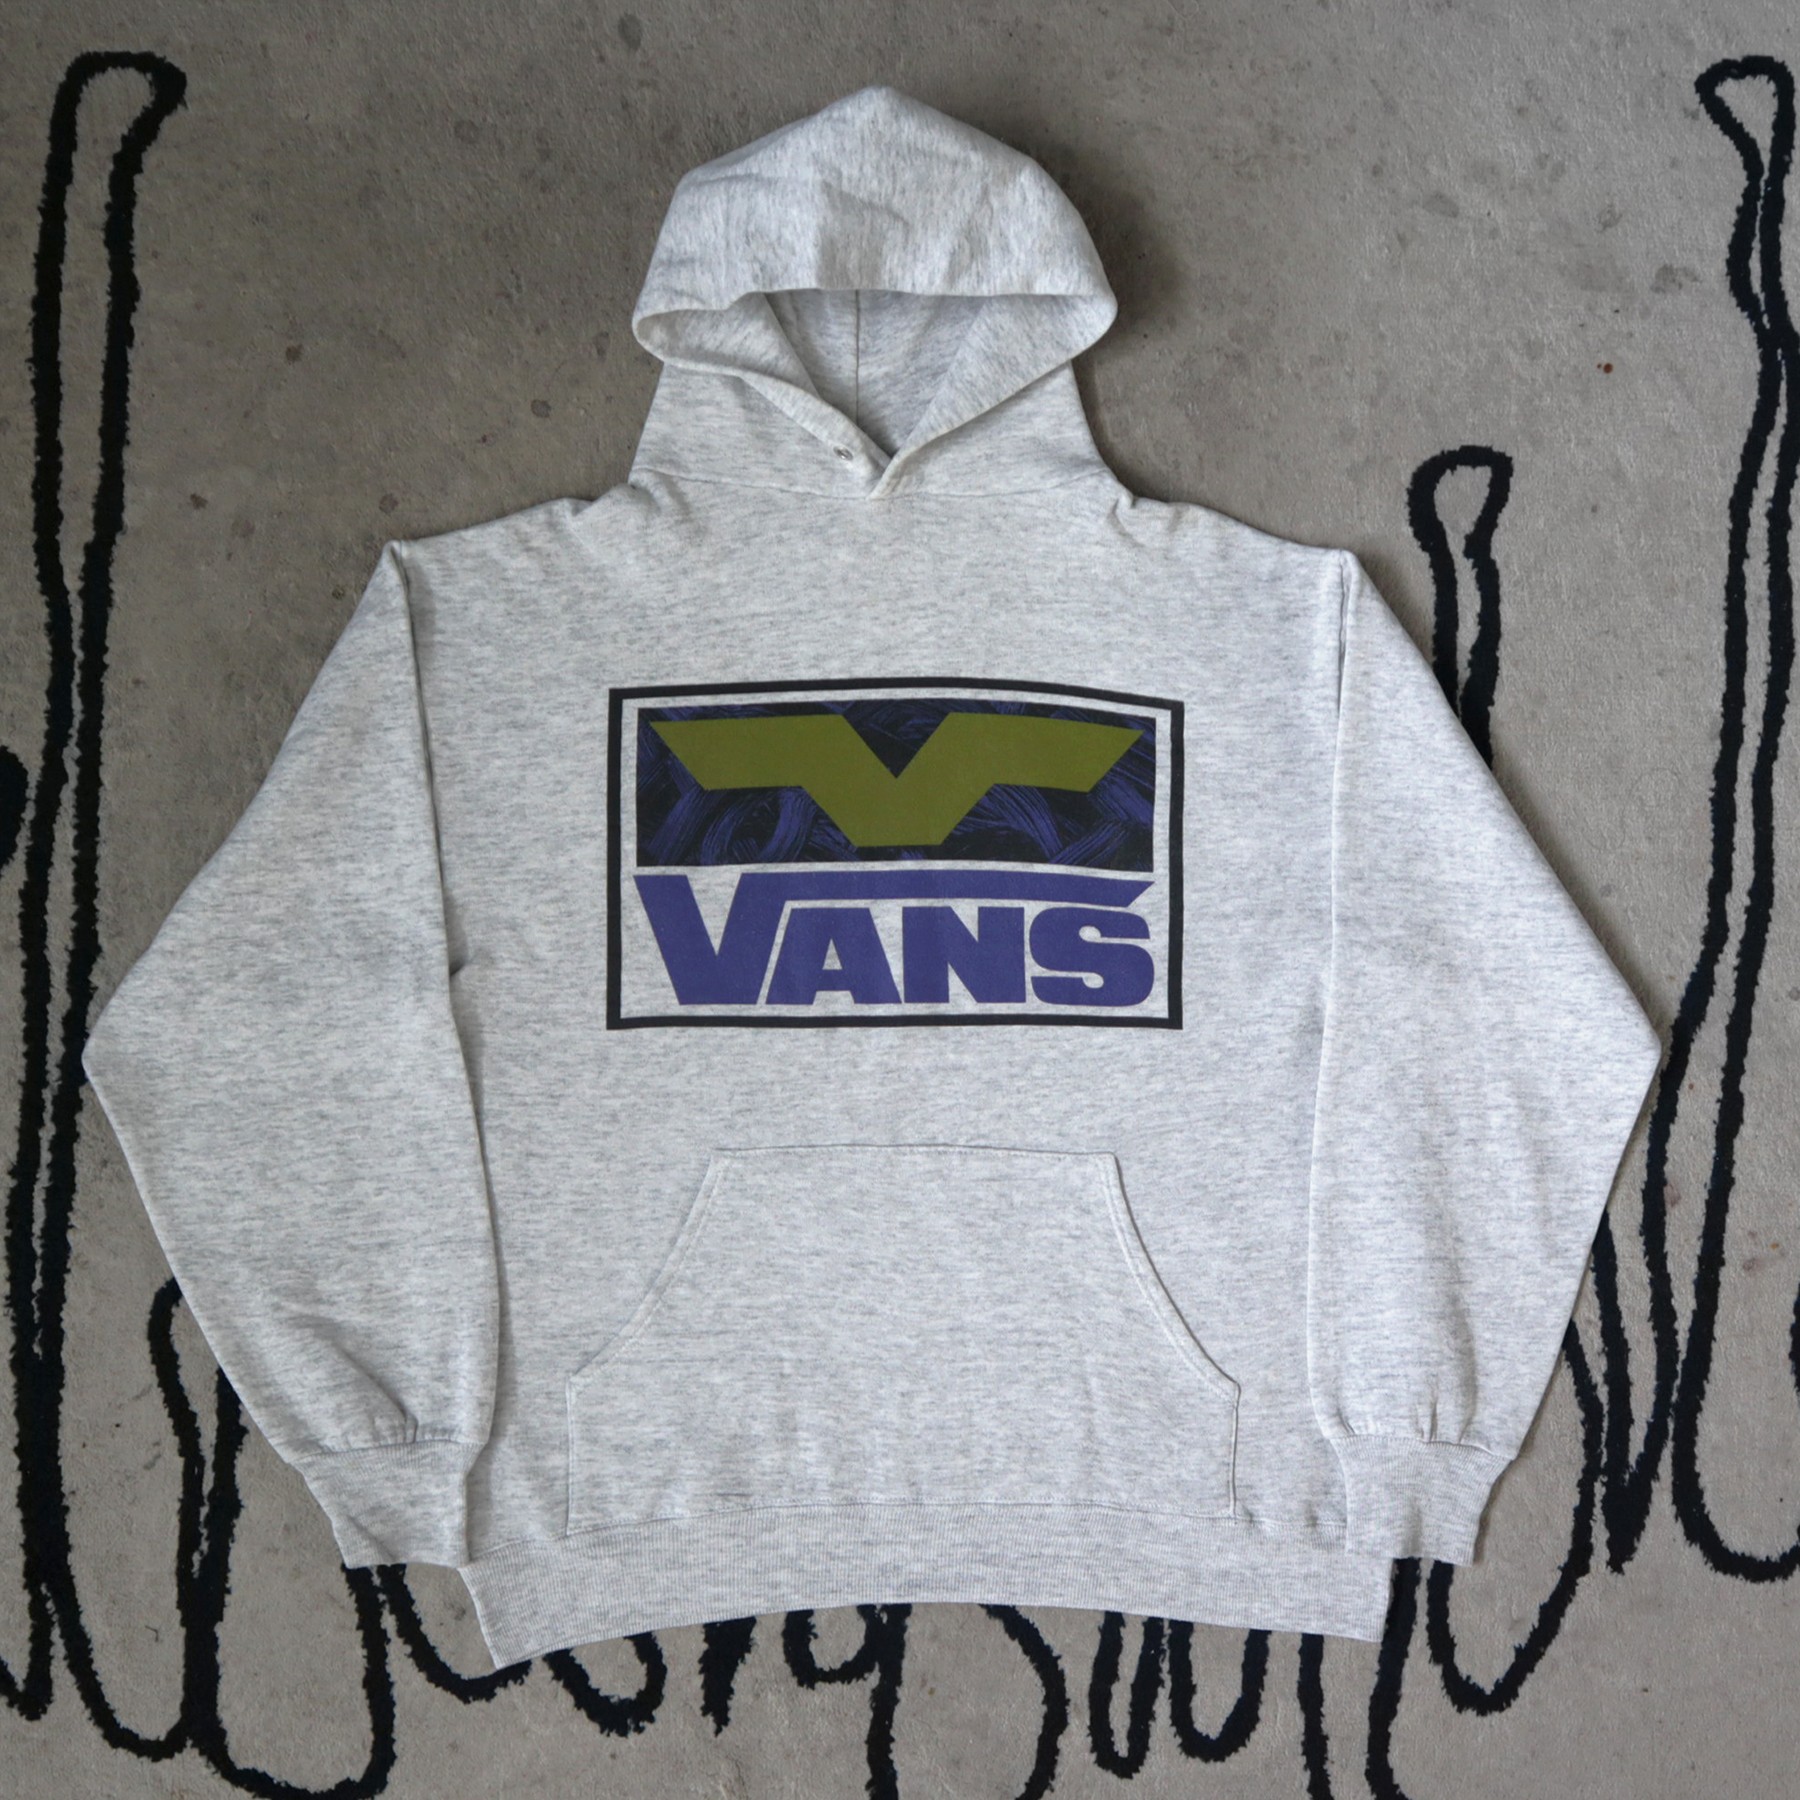 Vintage 80s 90s VANS Big Logo Sweater Sweatshirt Hoodie Pullover Jumper Made In U.S.A Size L - 1